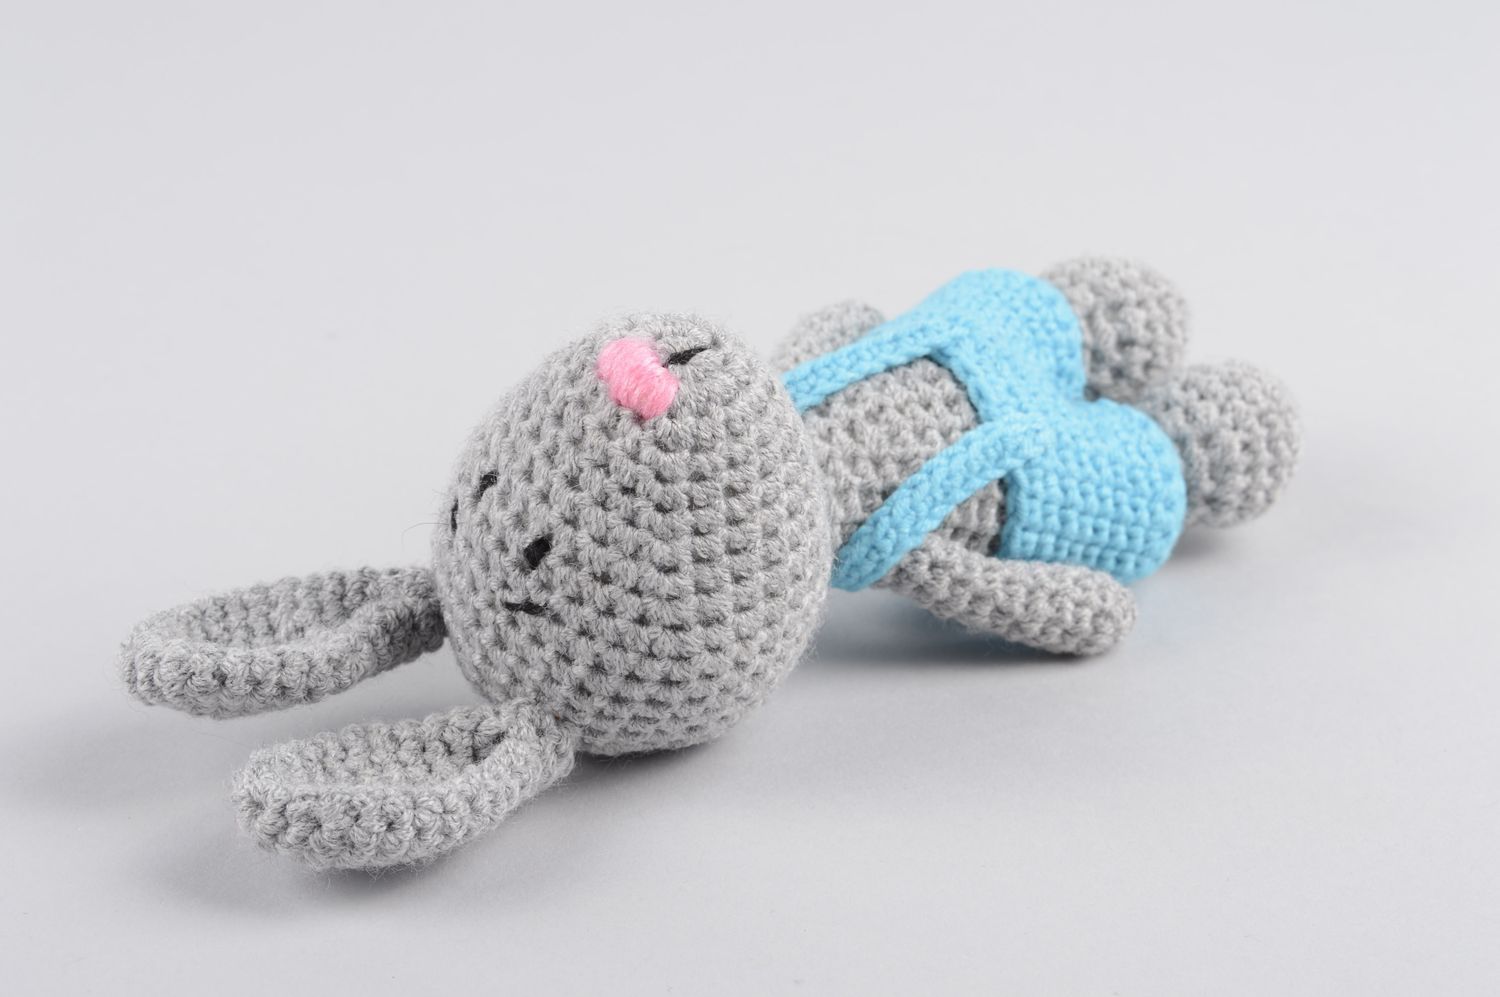 Beautiful handmade soft toy unusual crochet toy for kids birthday gift ideas photo 3